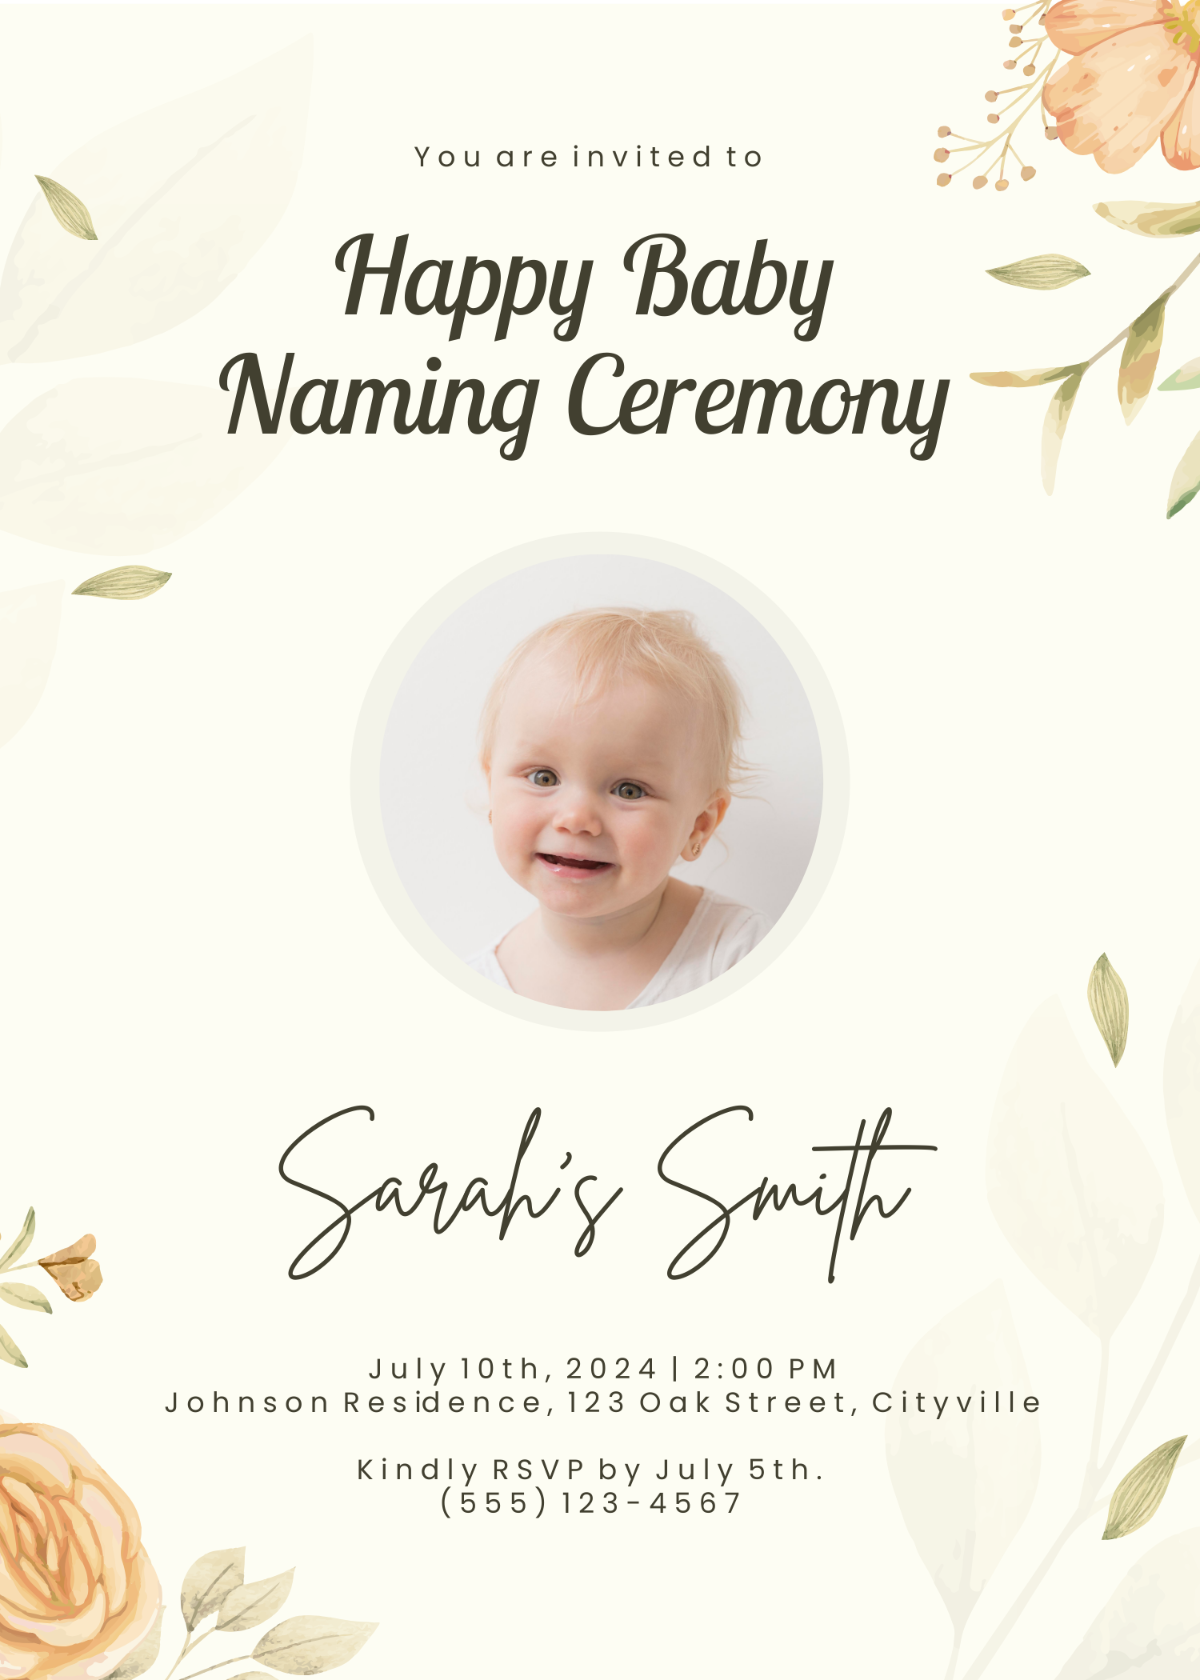 Happy Baby Naming Ceremony Invitation Template